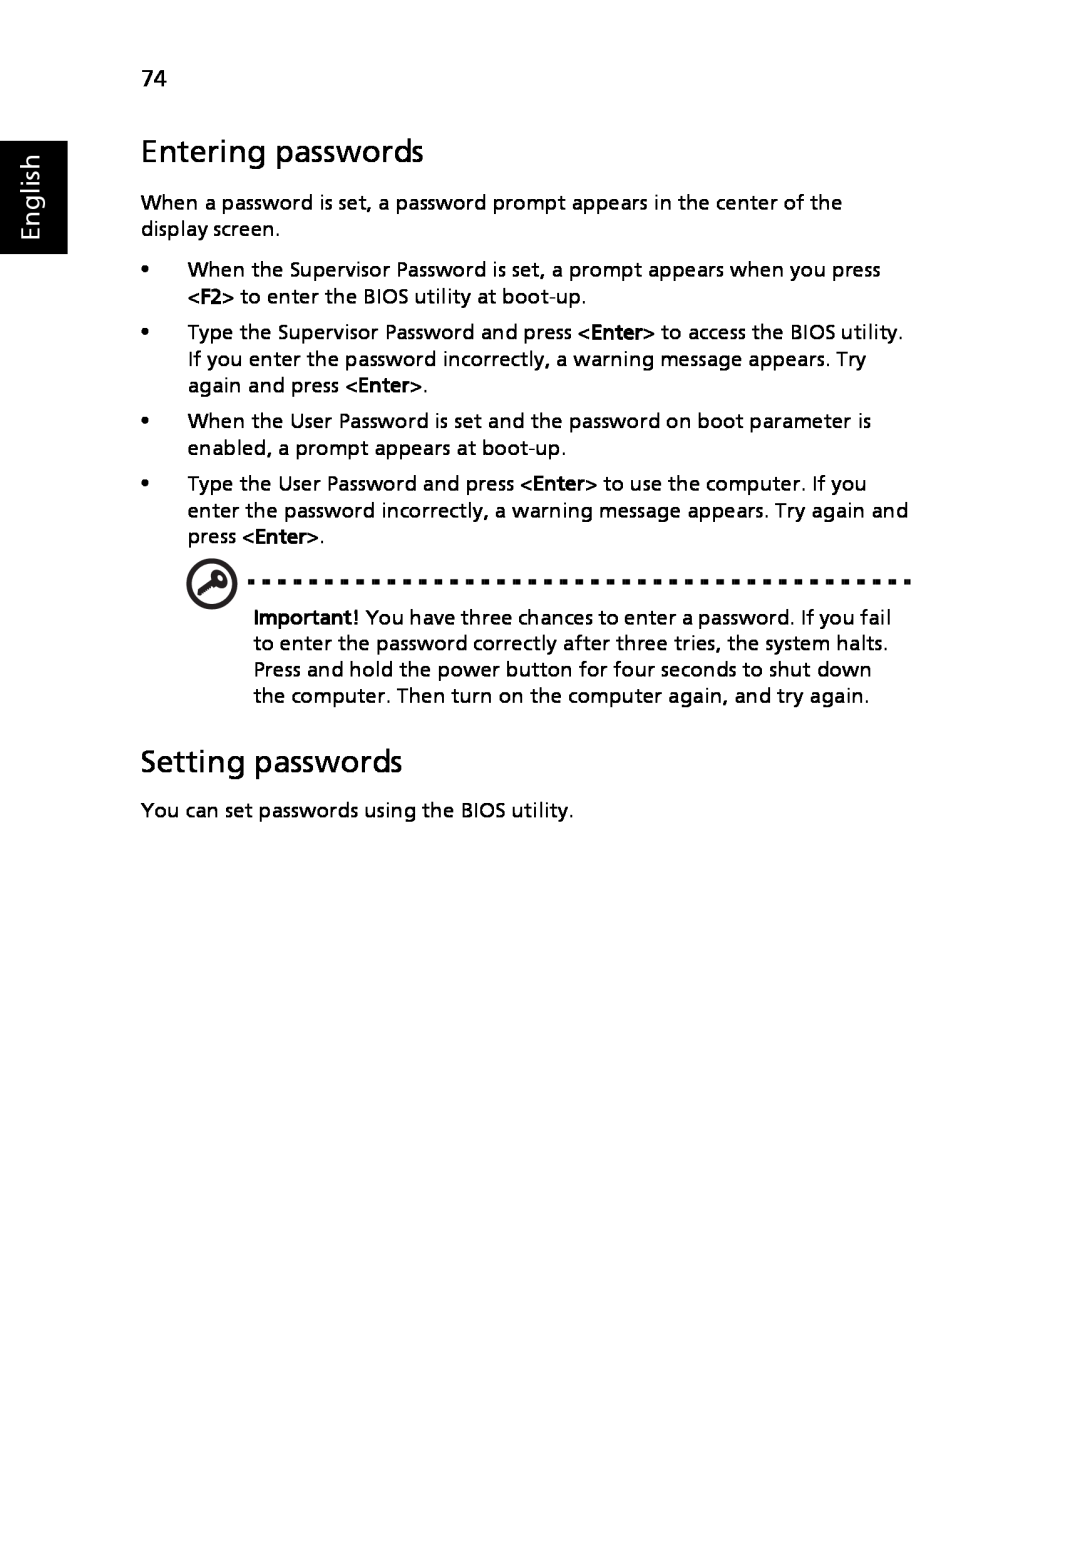 Acer 9120 manual Entering passwords, Setting passwords, English 